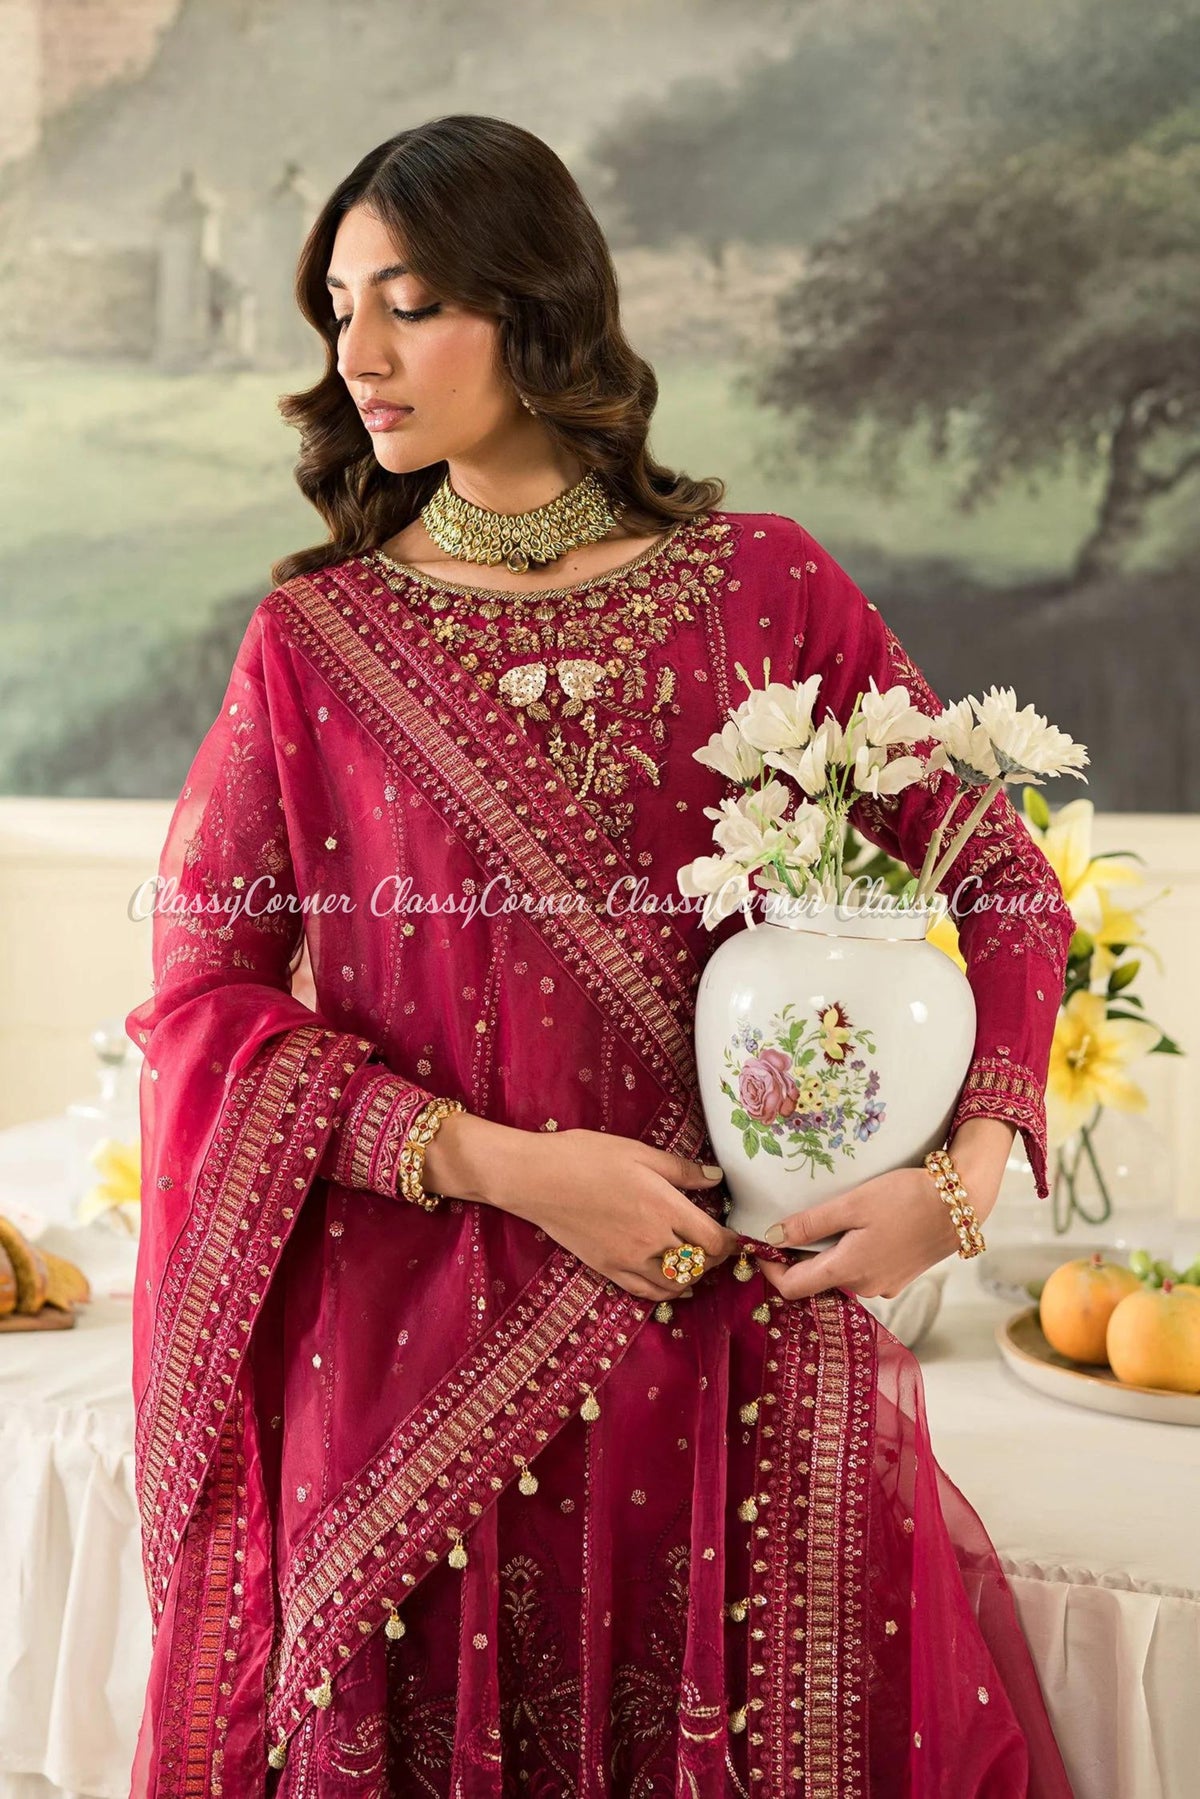 Pakistani wedding attire for women